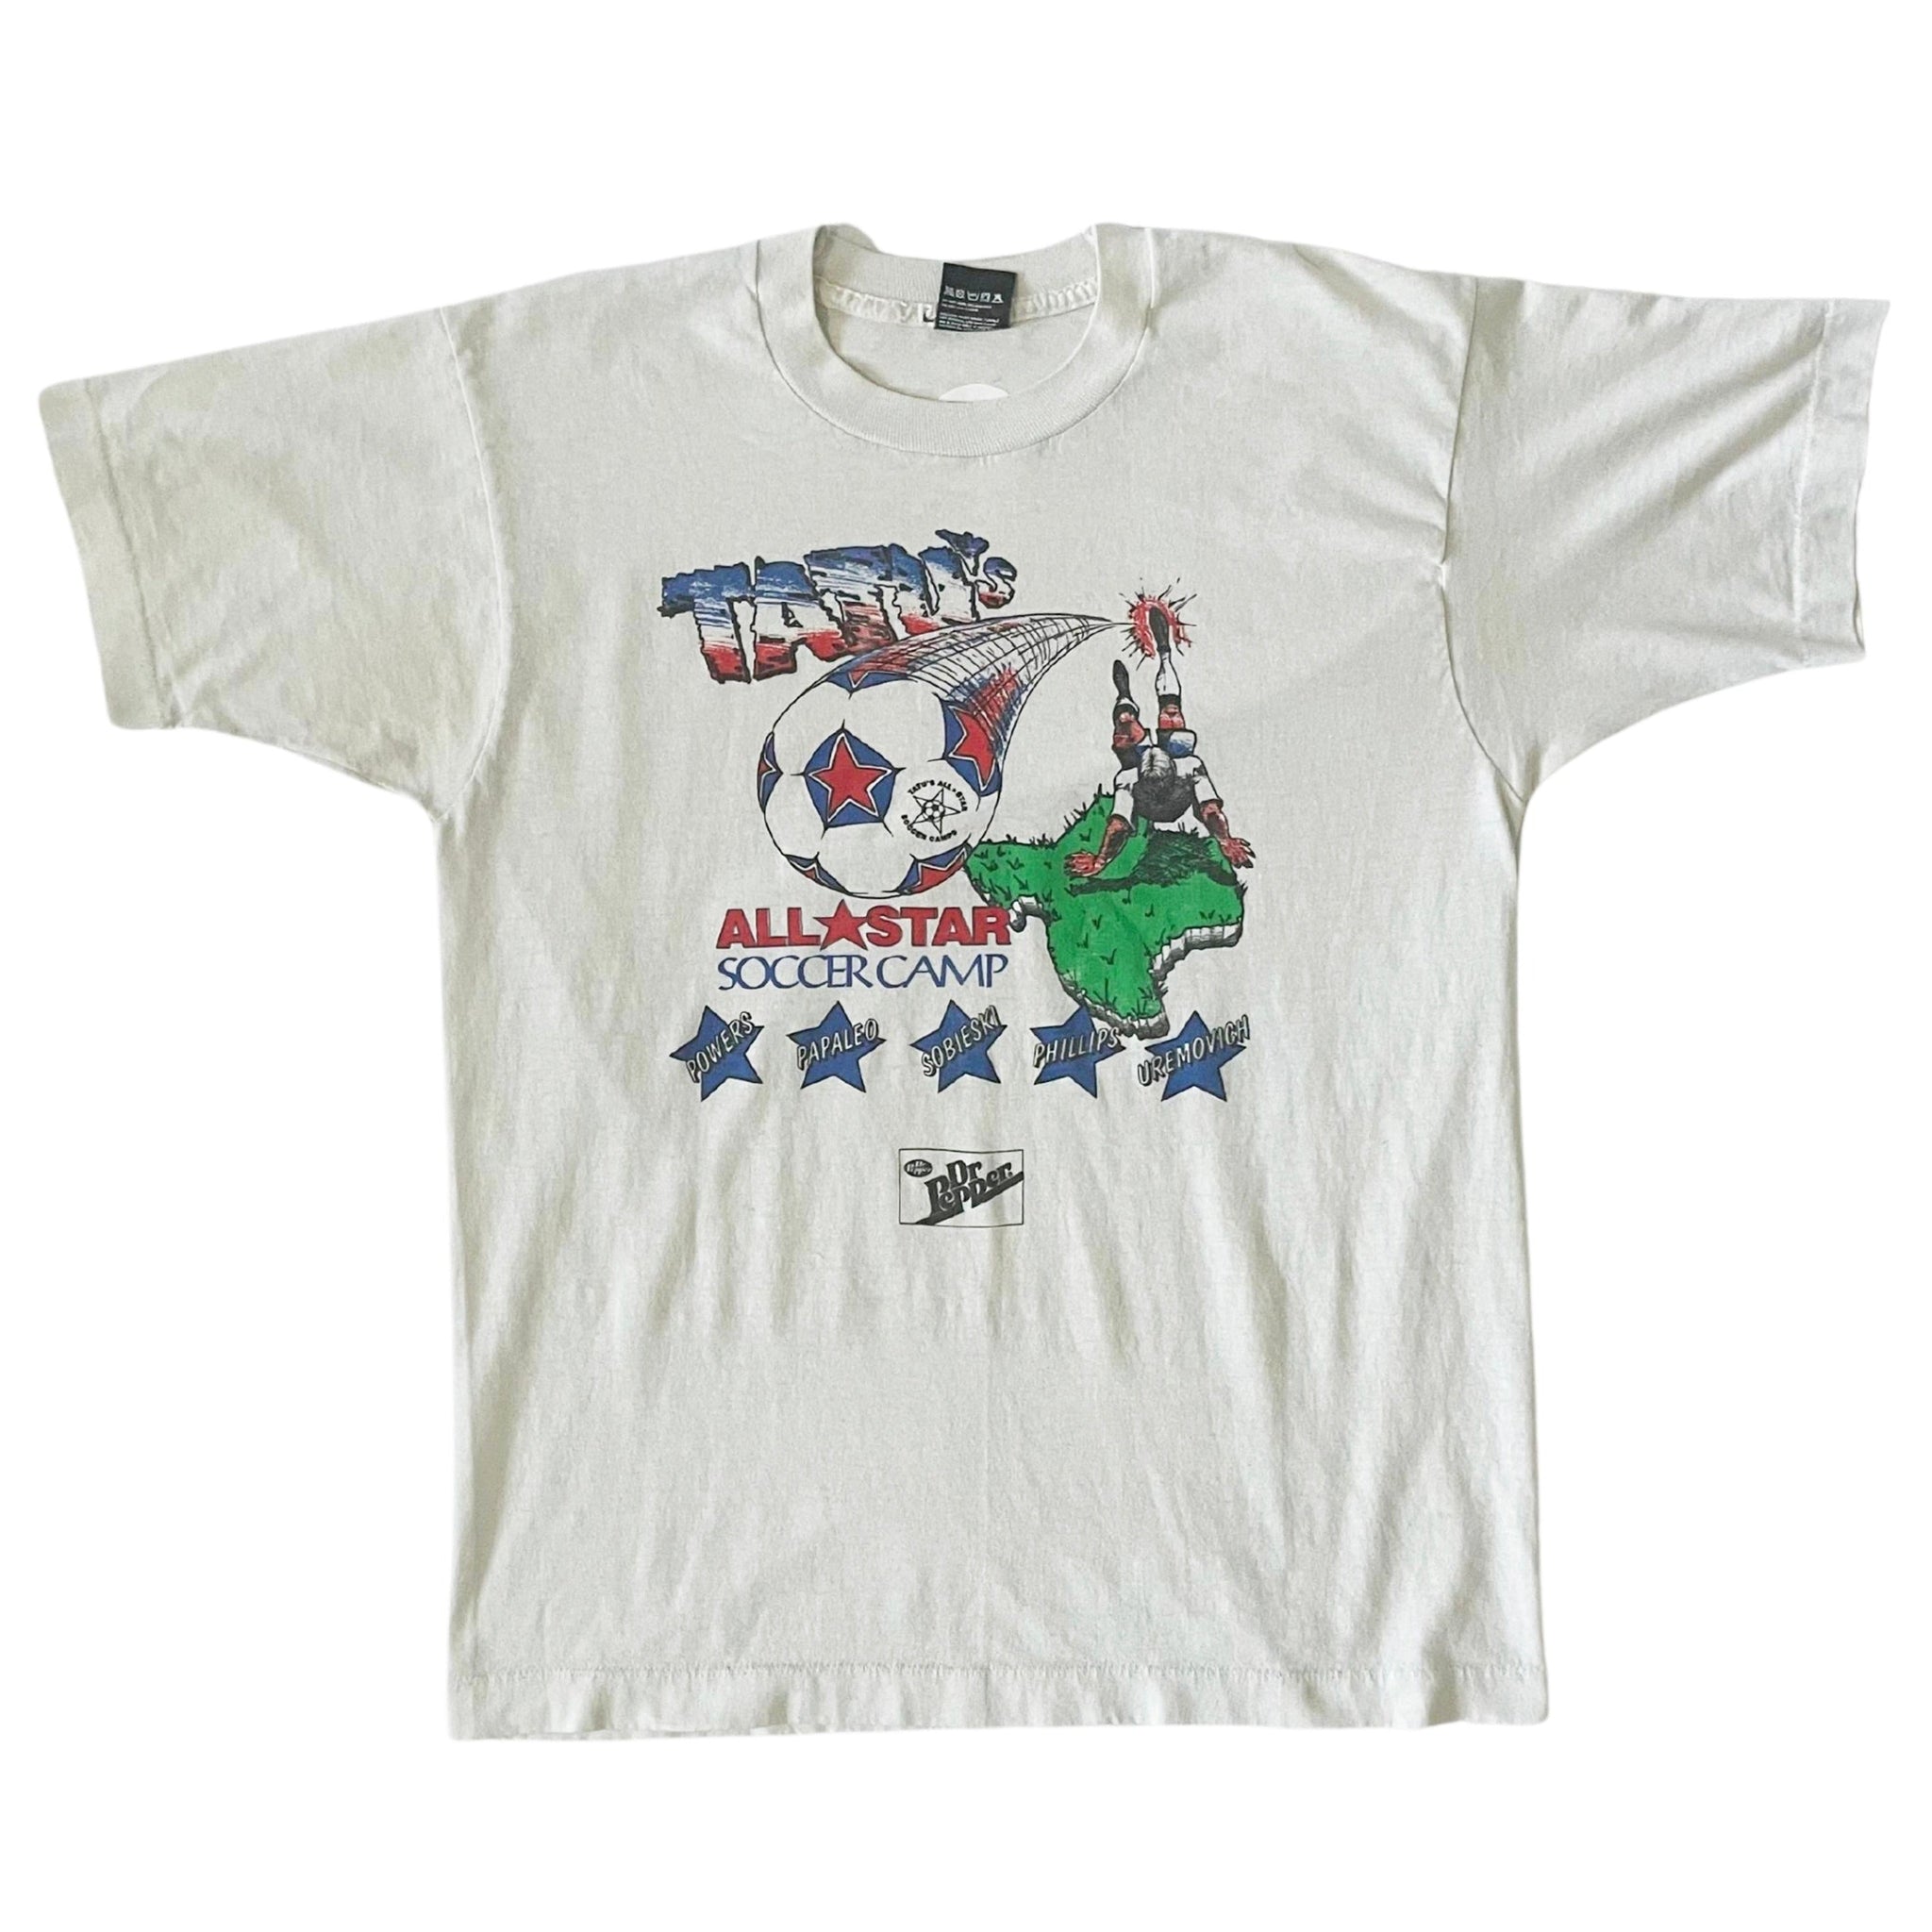 Tatu’s All-Star Soccer Camp T-Shirt - M